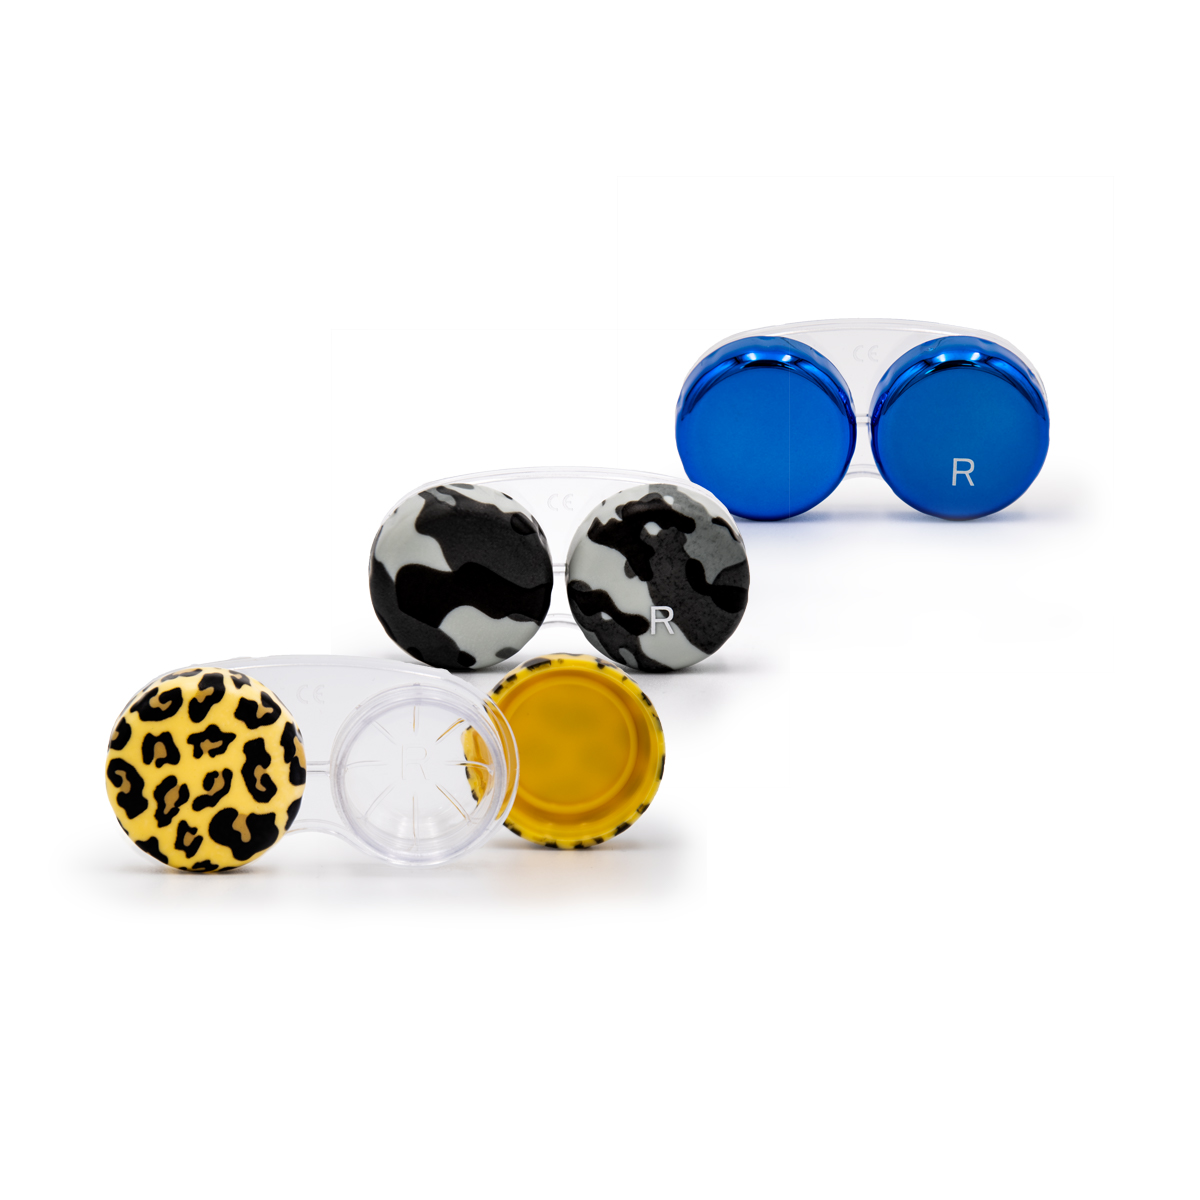 Featured image for “Opti-Cool Case Kontaktlinsenbehälter”